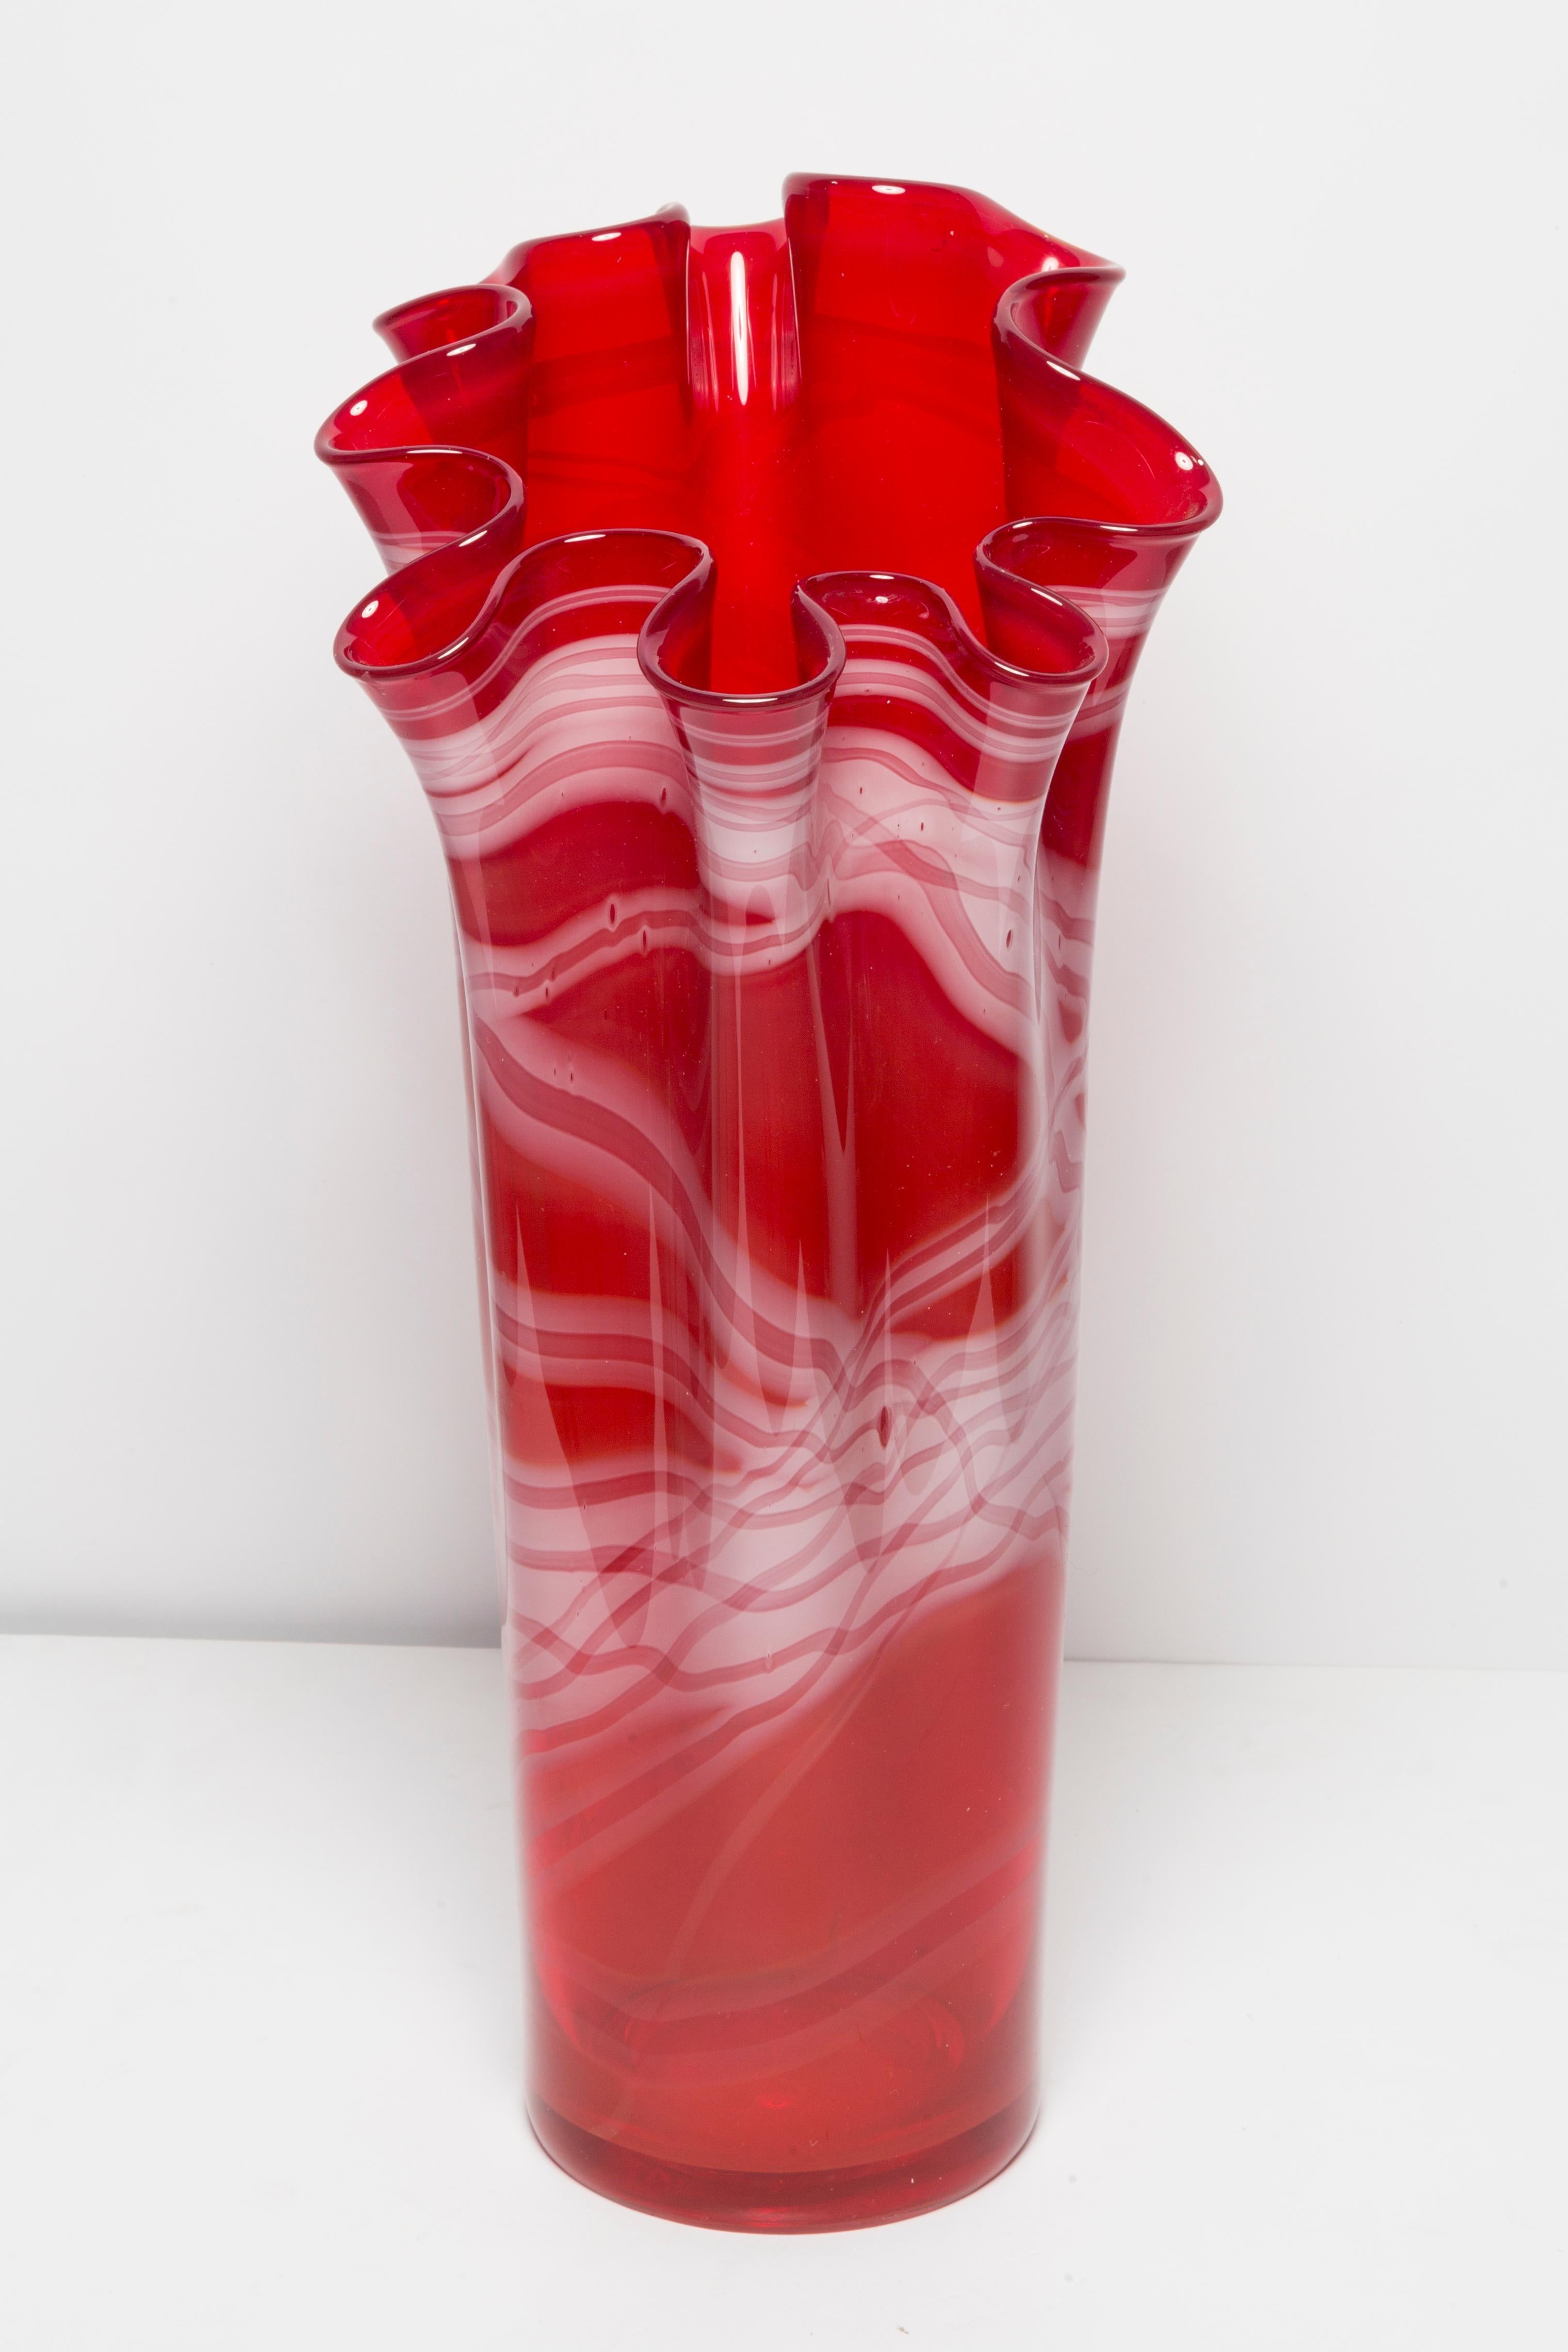 Polish Mid Century Artistic Glass Big Red Vase, Tarnowiec, Sulczan, Europe, 1970s For Sale